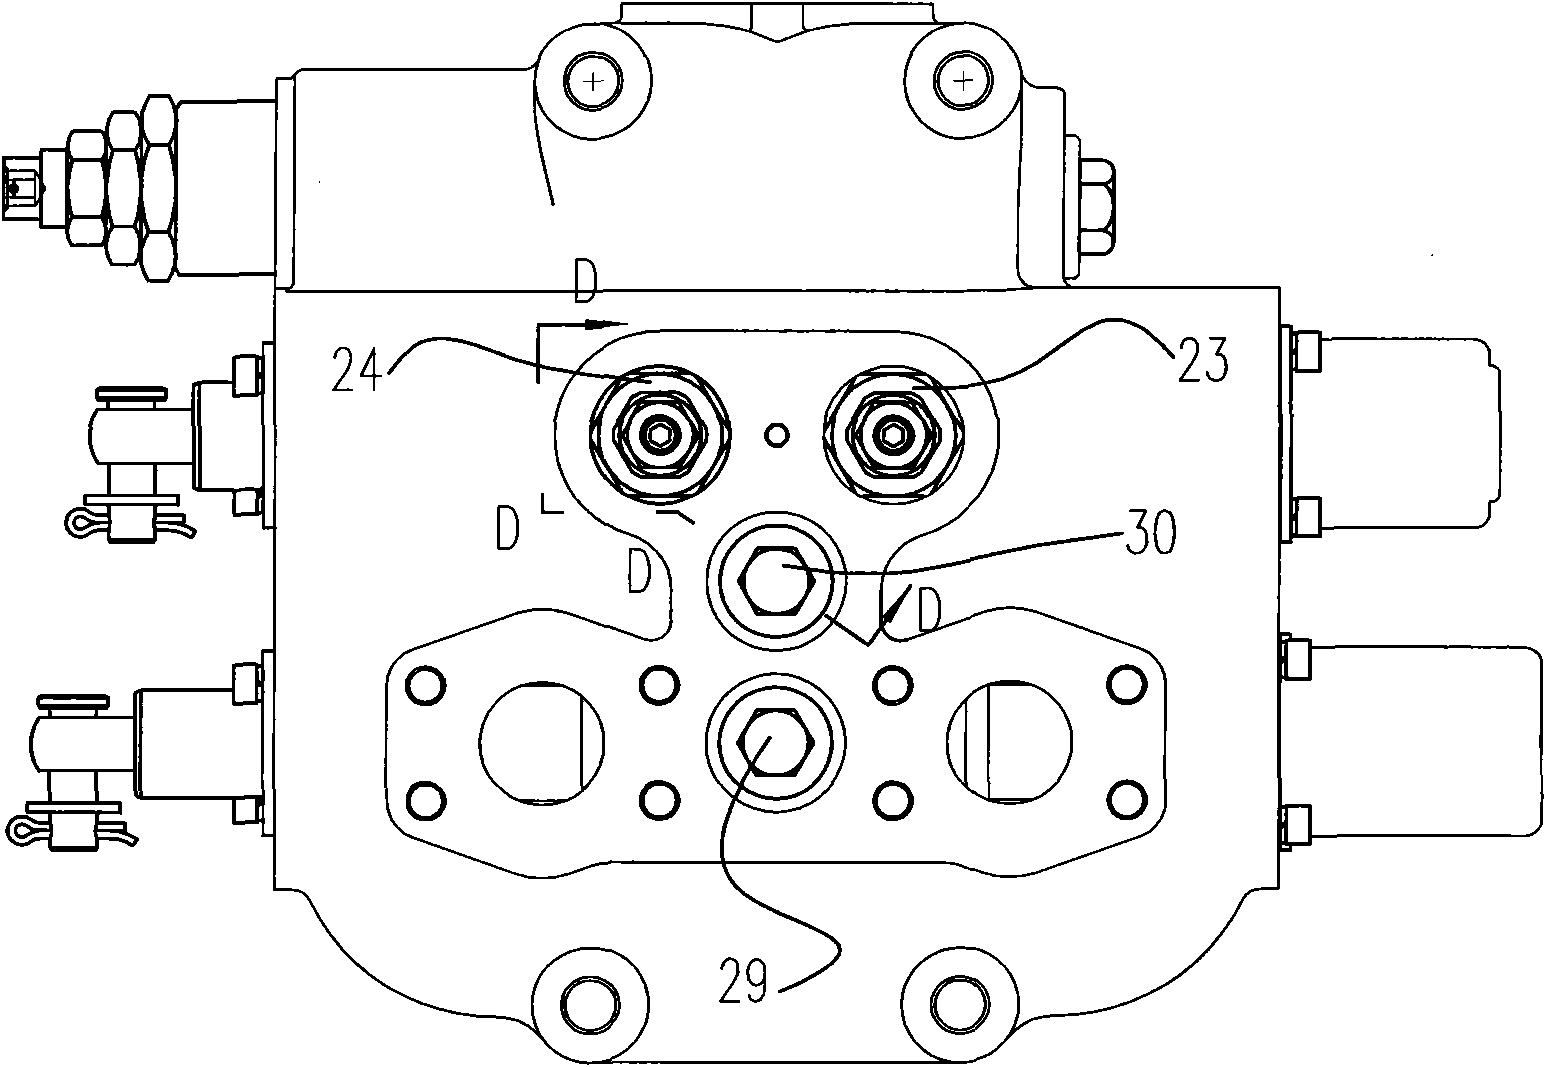 Integral manual multi-path reversing valve